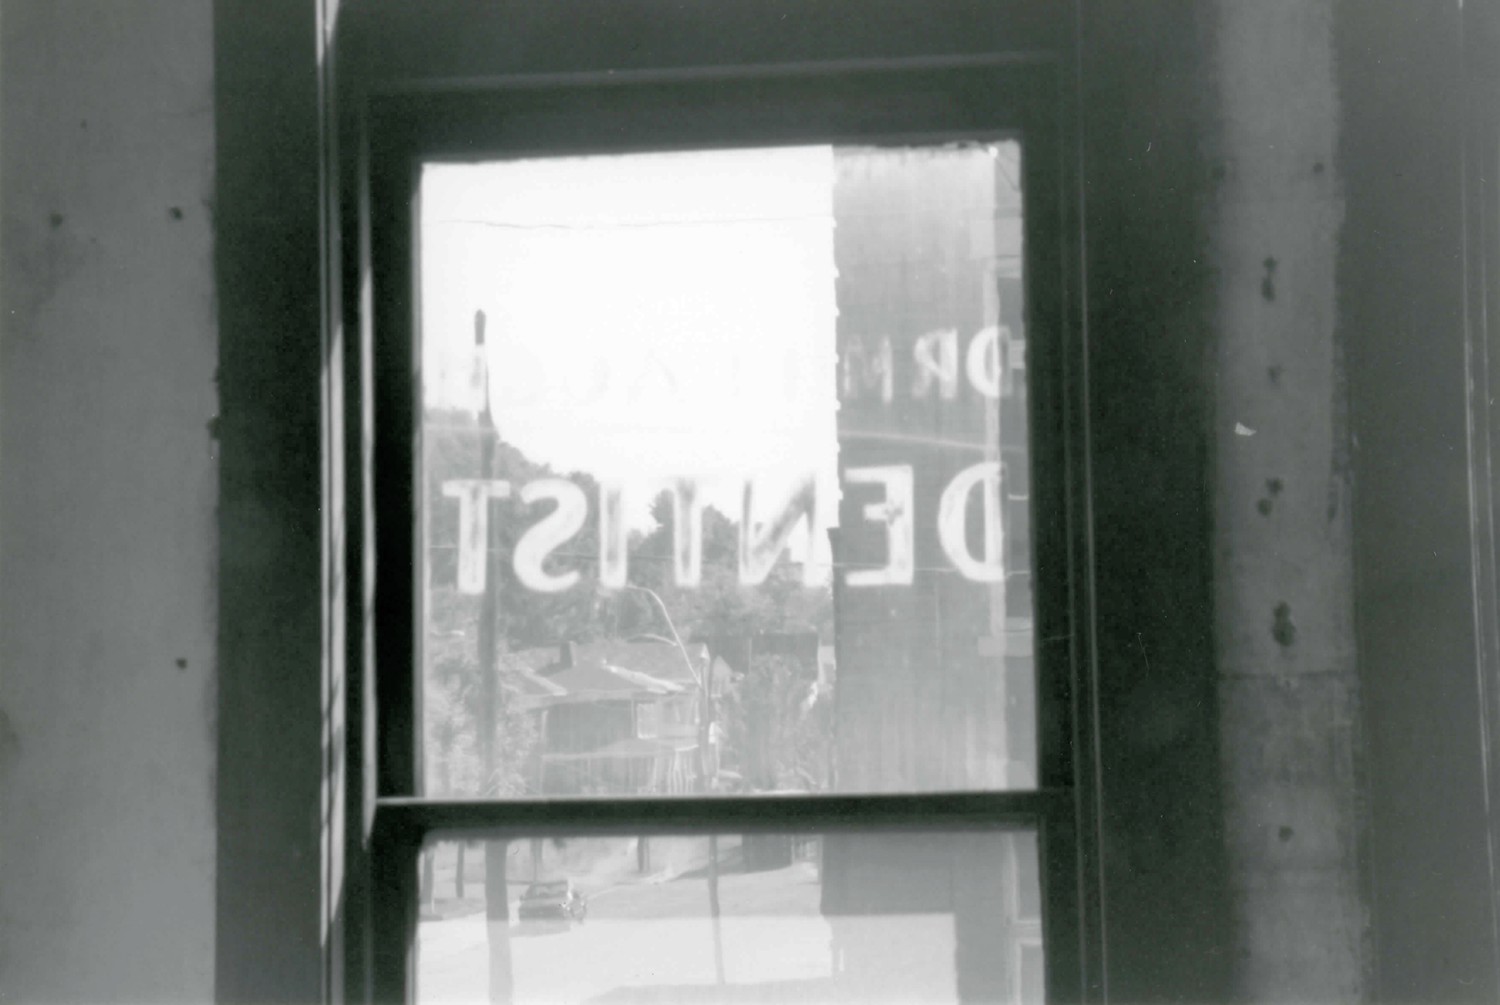 T. Lanning & Company Department Store, Dennison Ohio Interior detail of west elevation second floor window (1999)